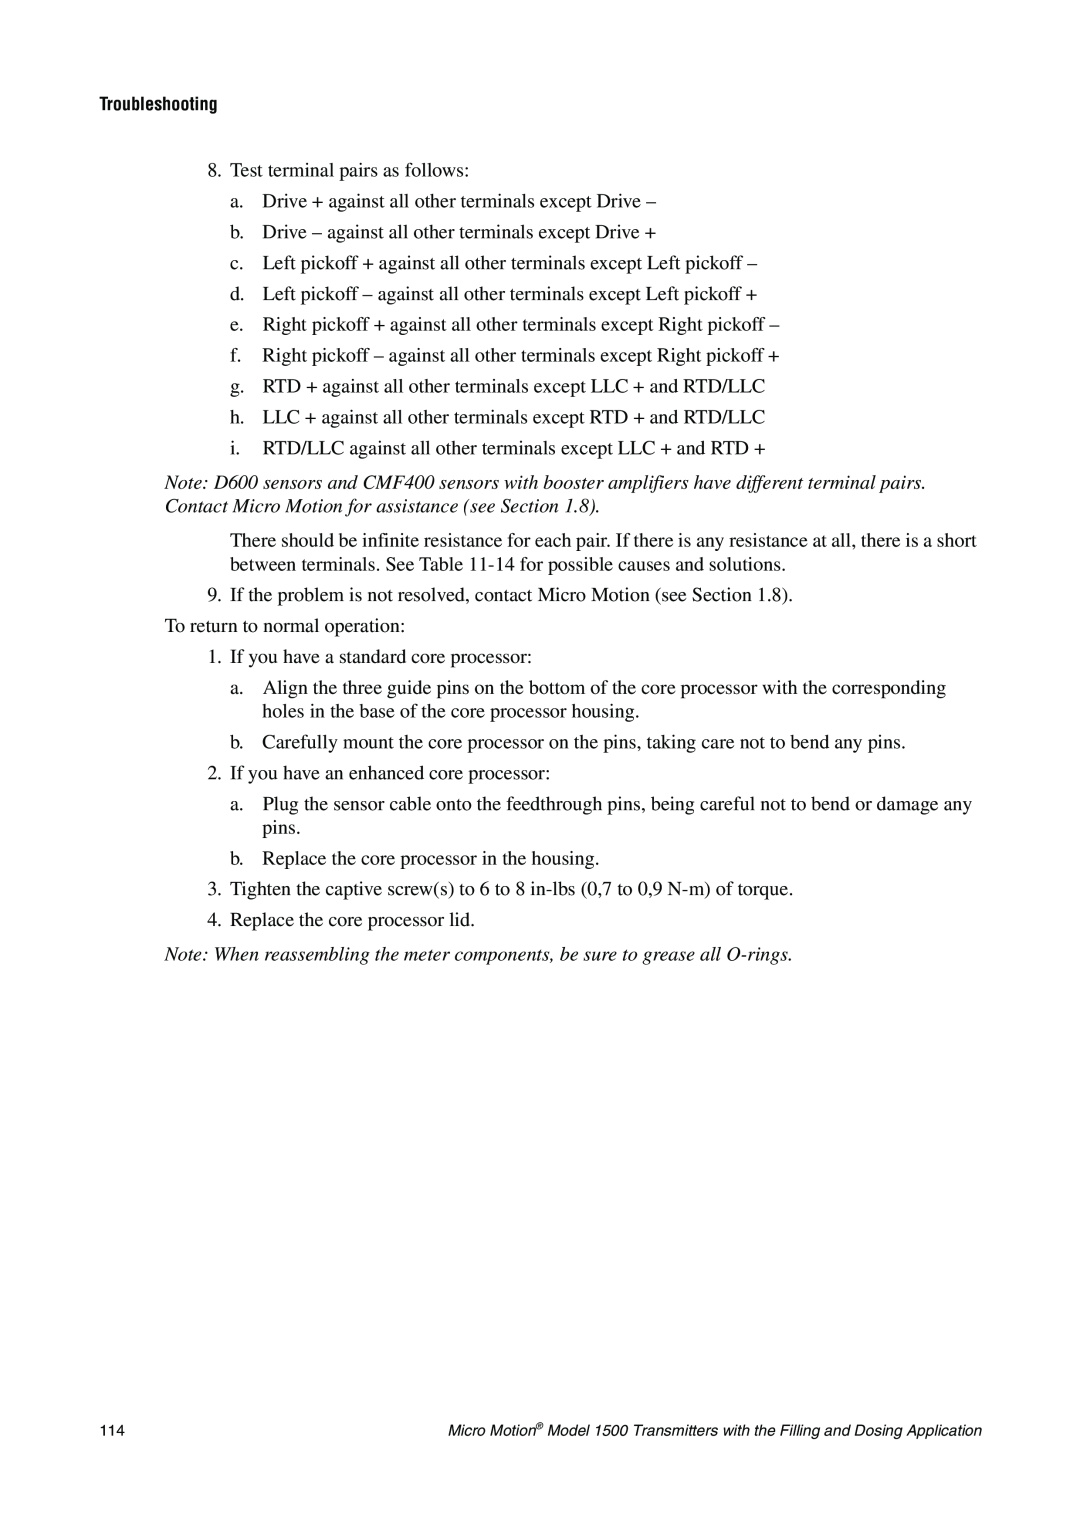 Emerson Process Management 1500 manual Test terminal pairs as follows 